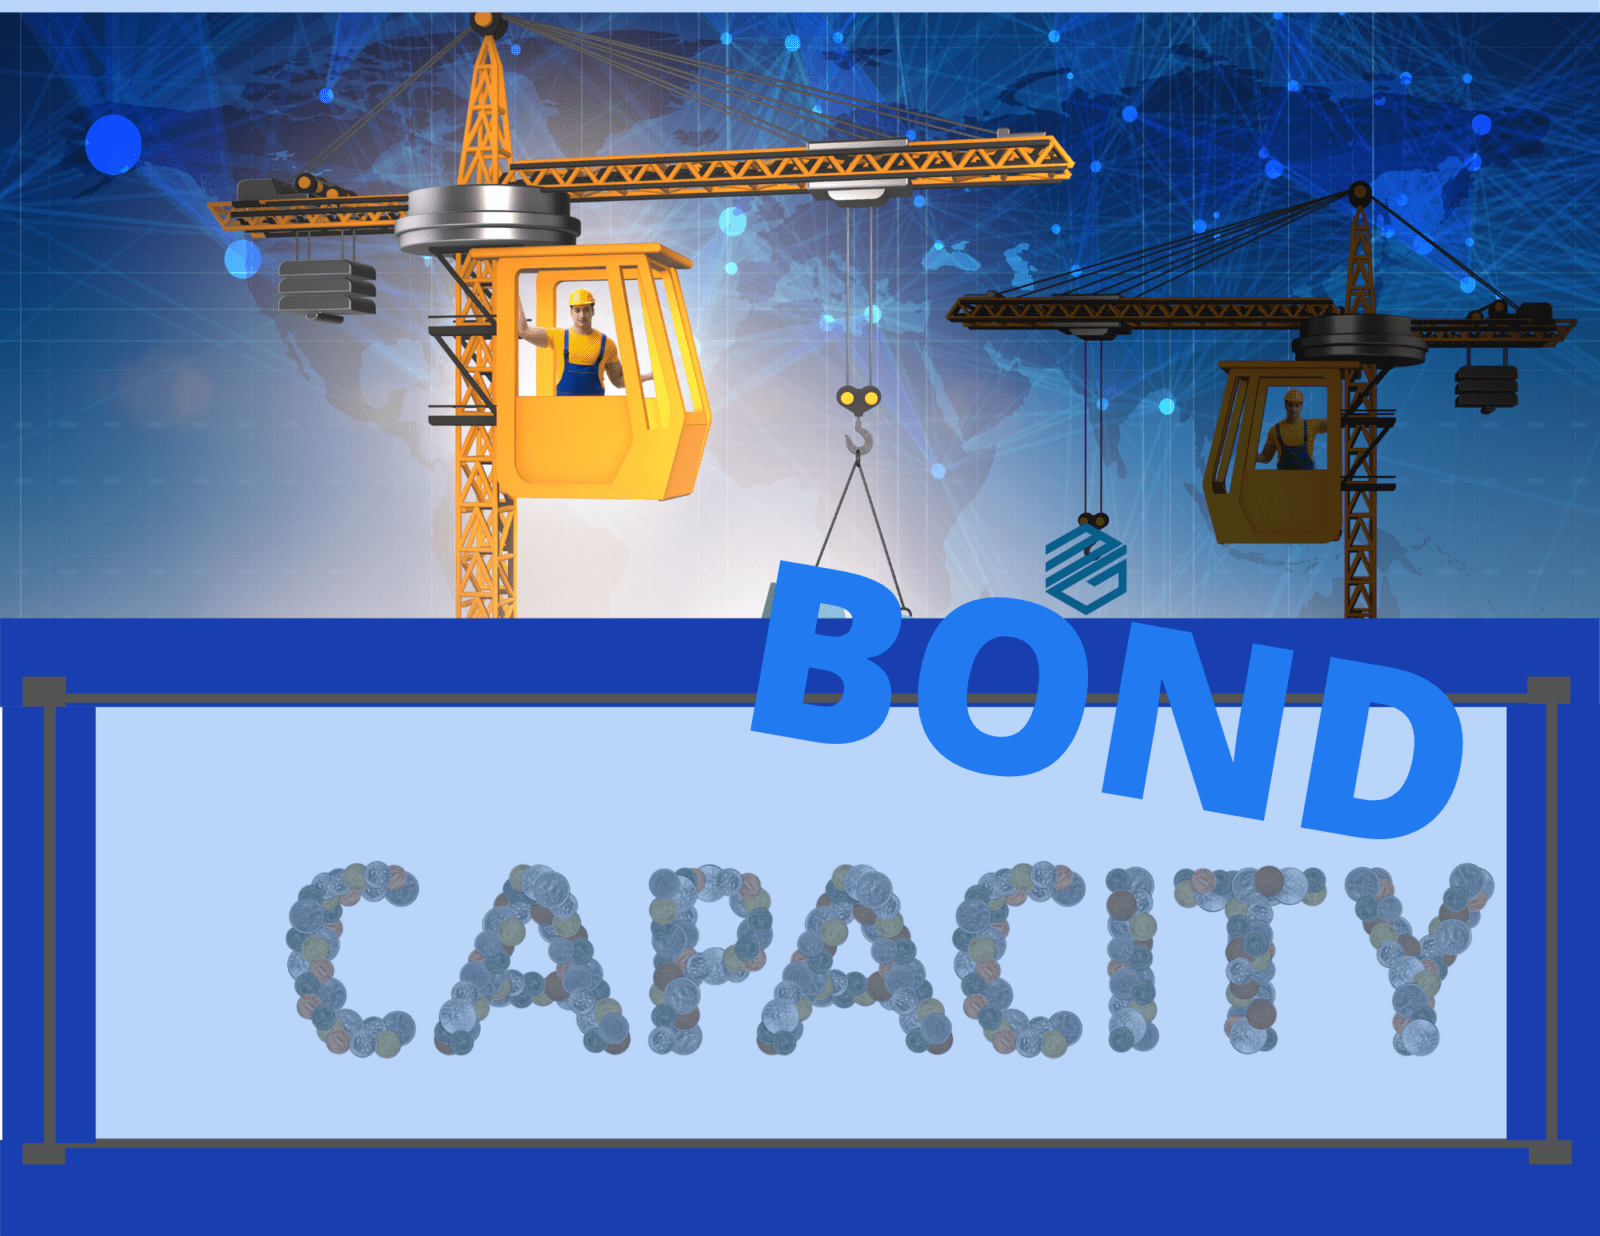 Increase Surety Bond Capacity - Construction Crane pulling up the words "Bond Capacity"